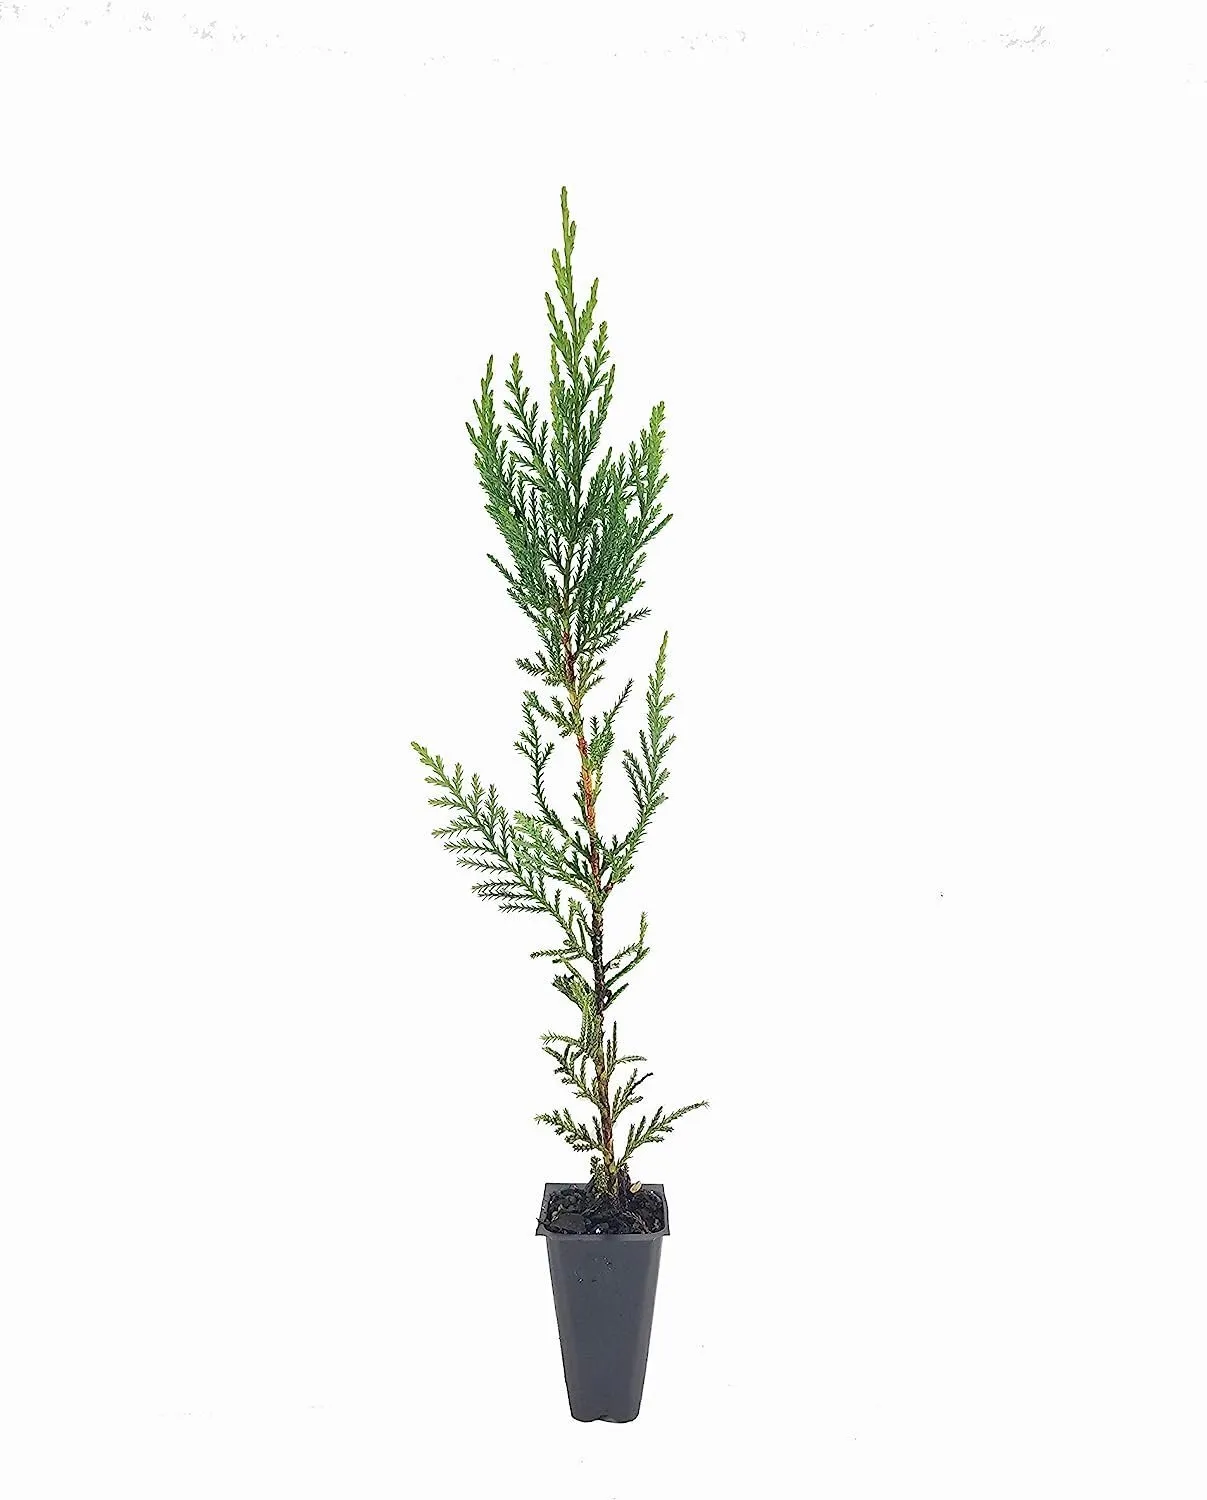 Murray Cypress Tree 3 Live Plants Upright Screening Tree - $44.85